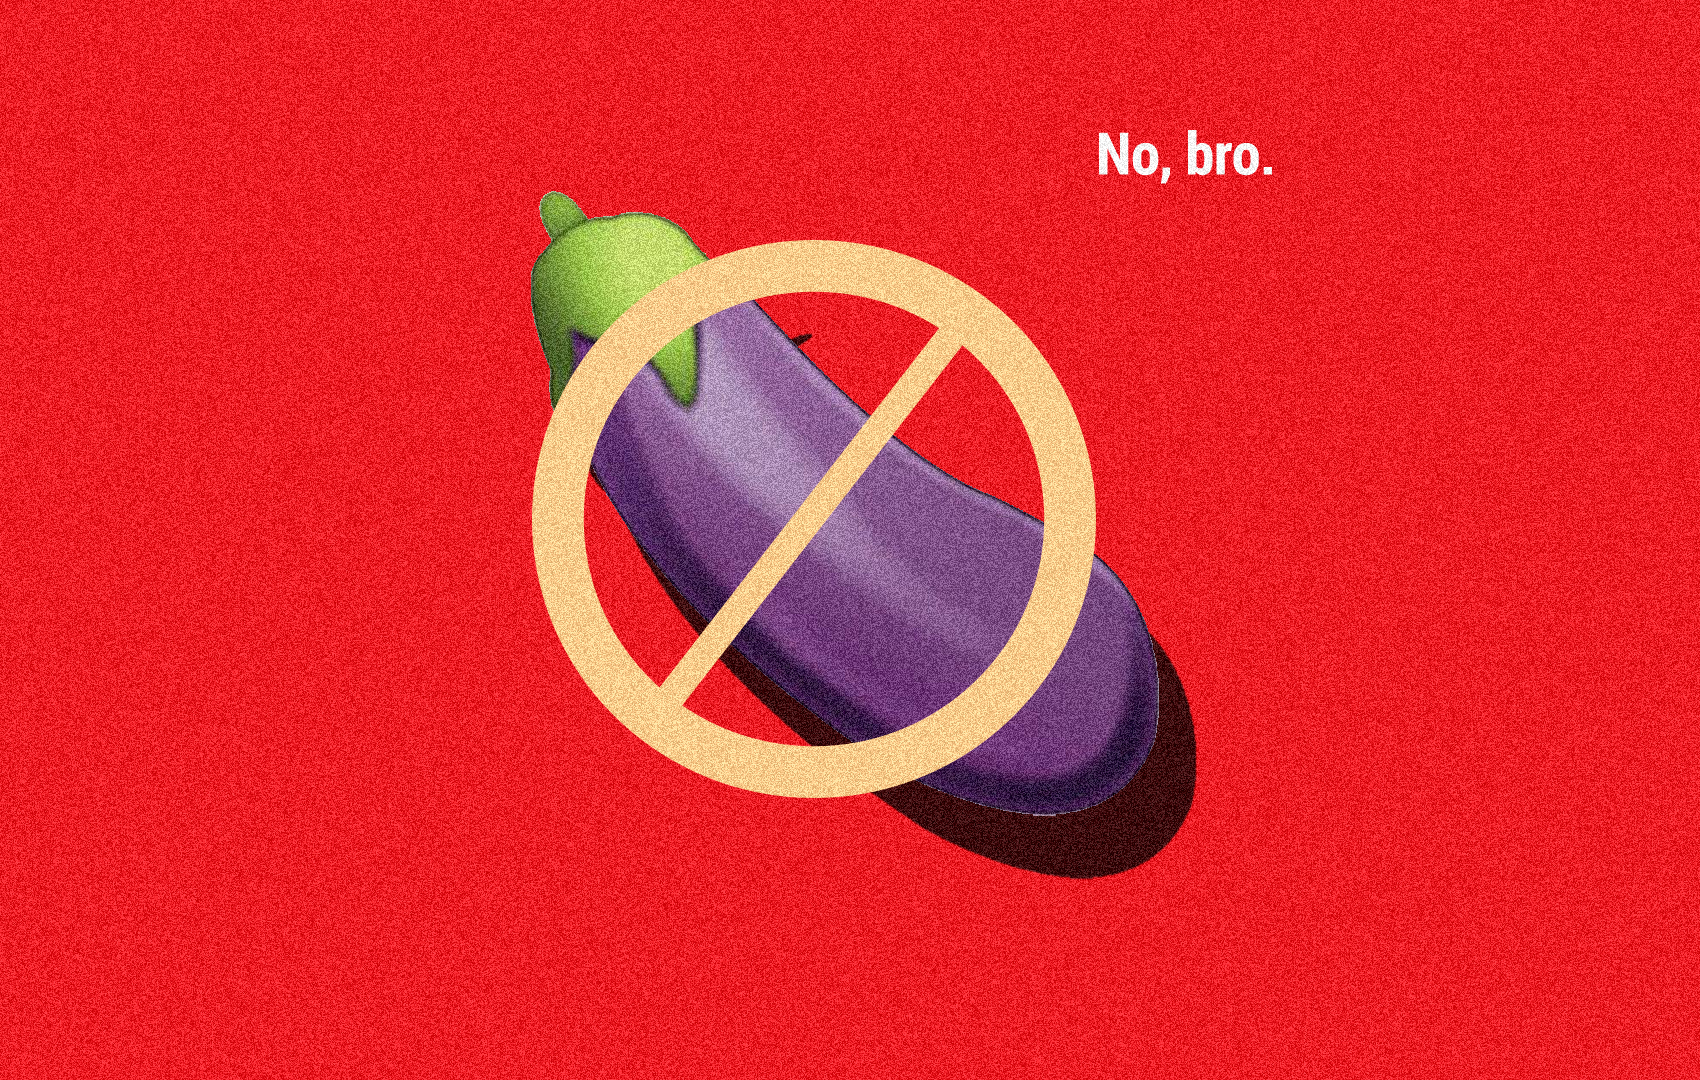 eggplant emoji crossed out image